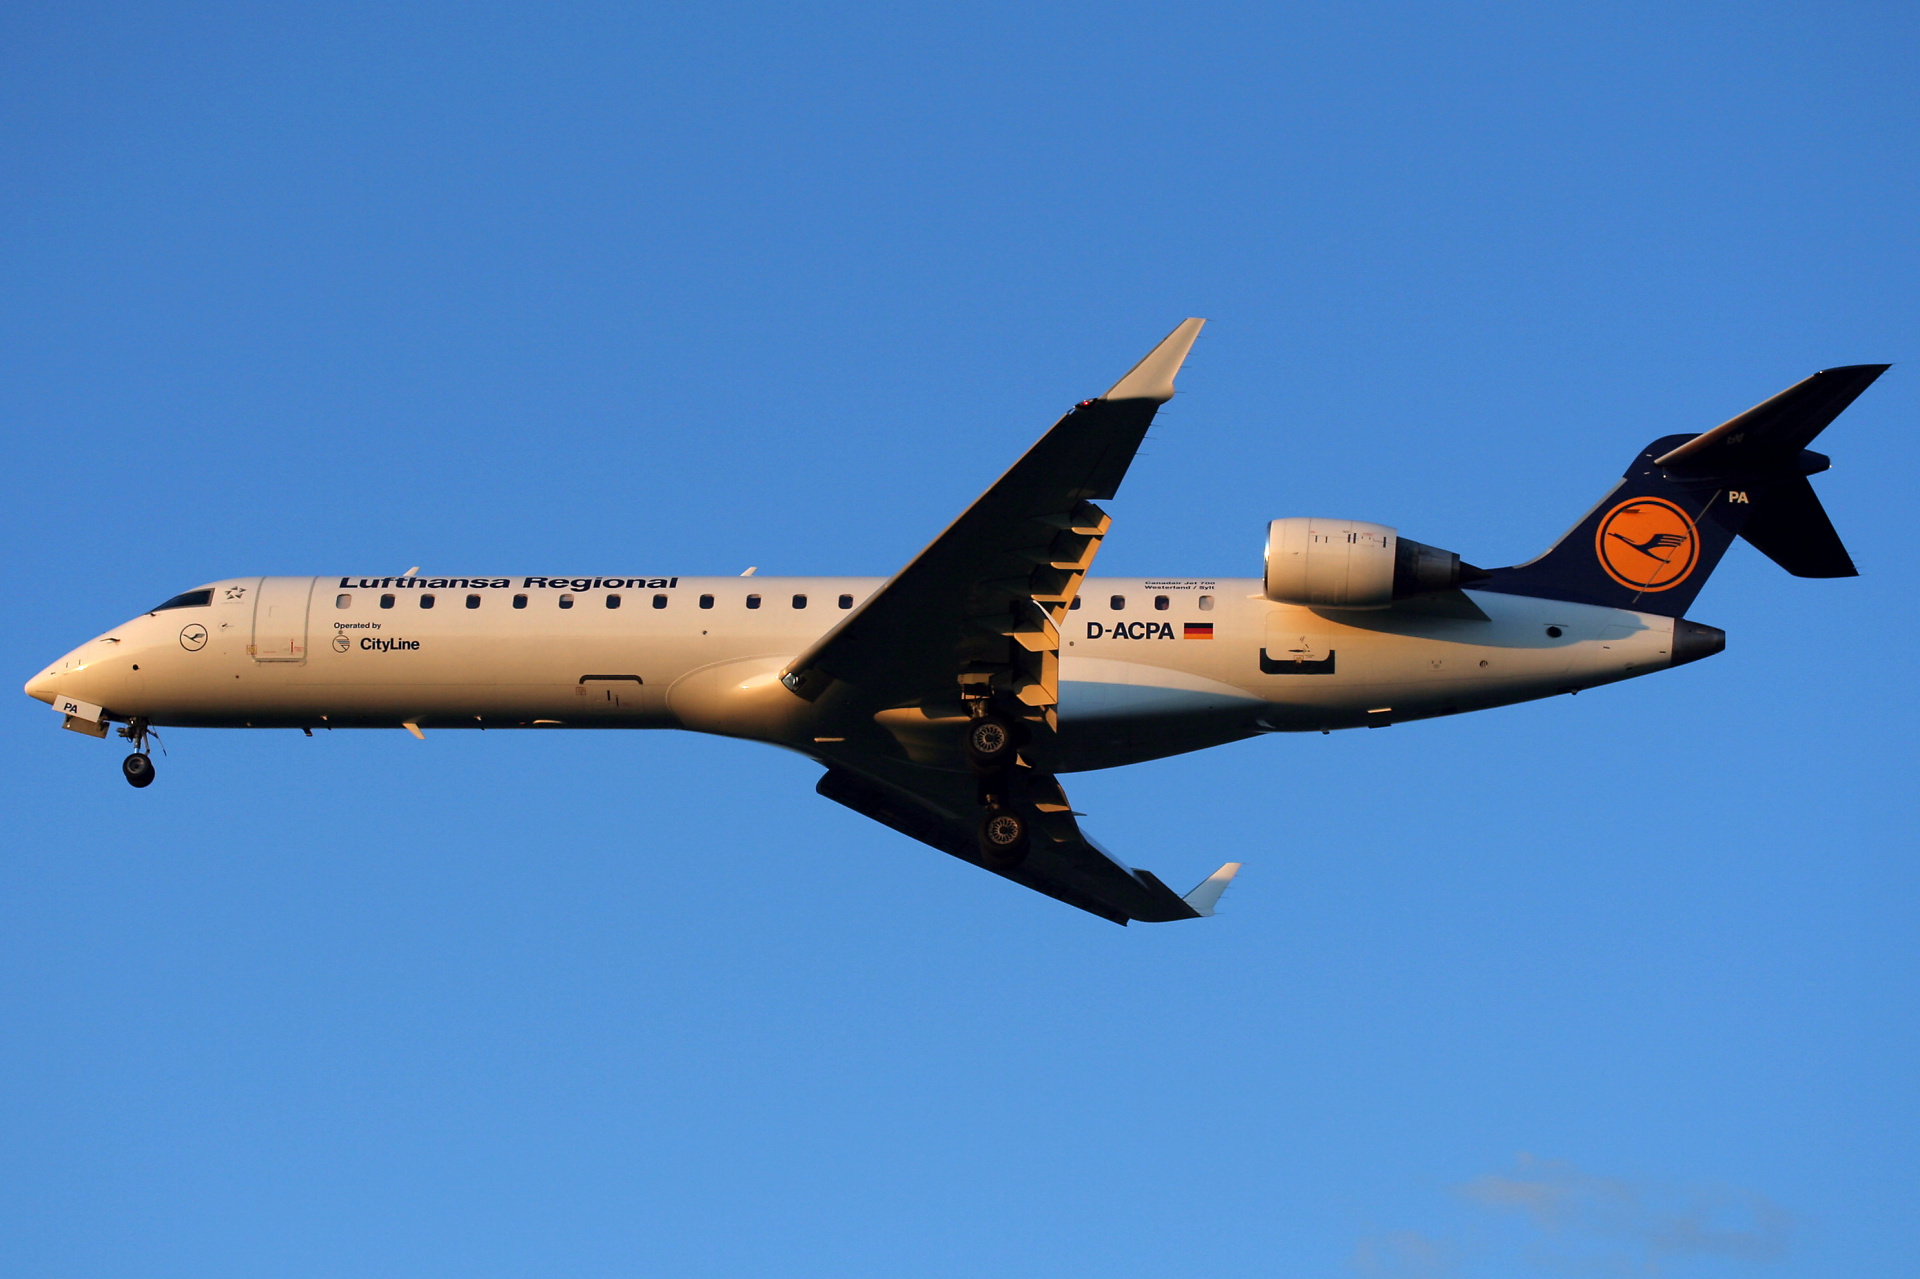 D-ACPA, Lufthansa Regional (CityLine) (Aircraft » EPWA Spotting » Mitsubishi Regional Jet » CRJ-700)